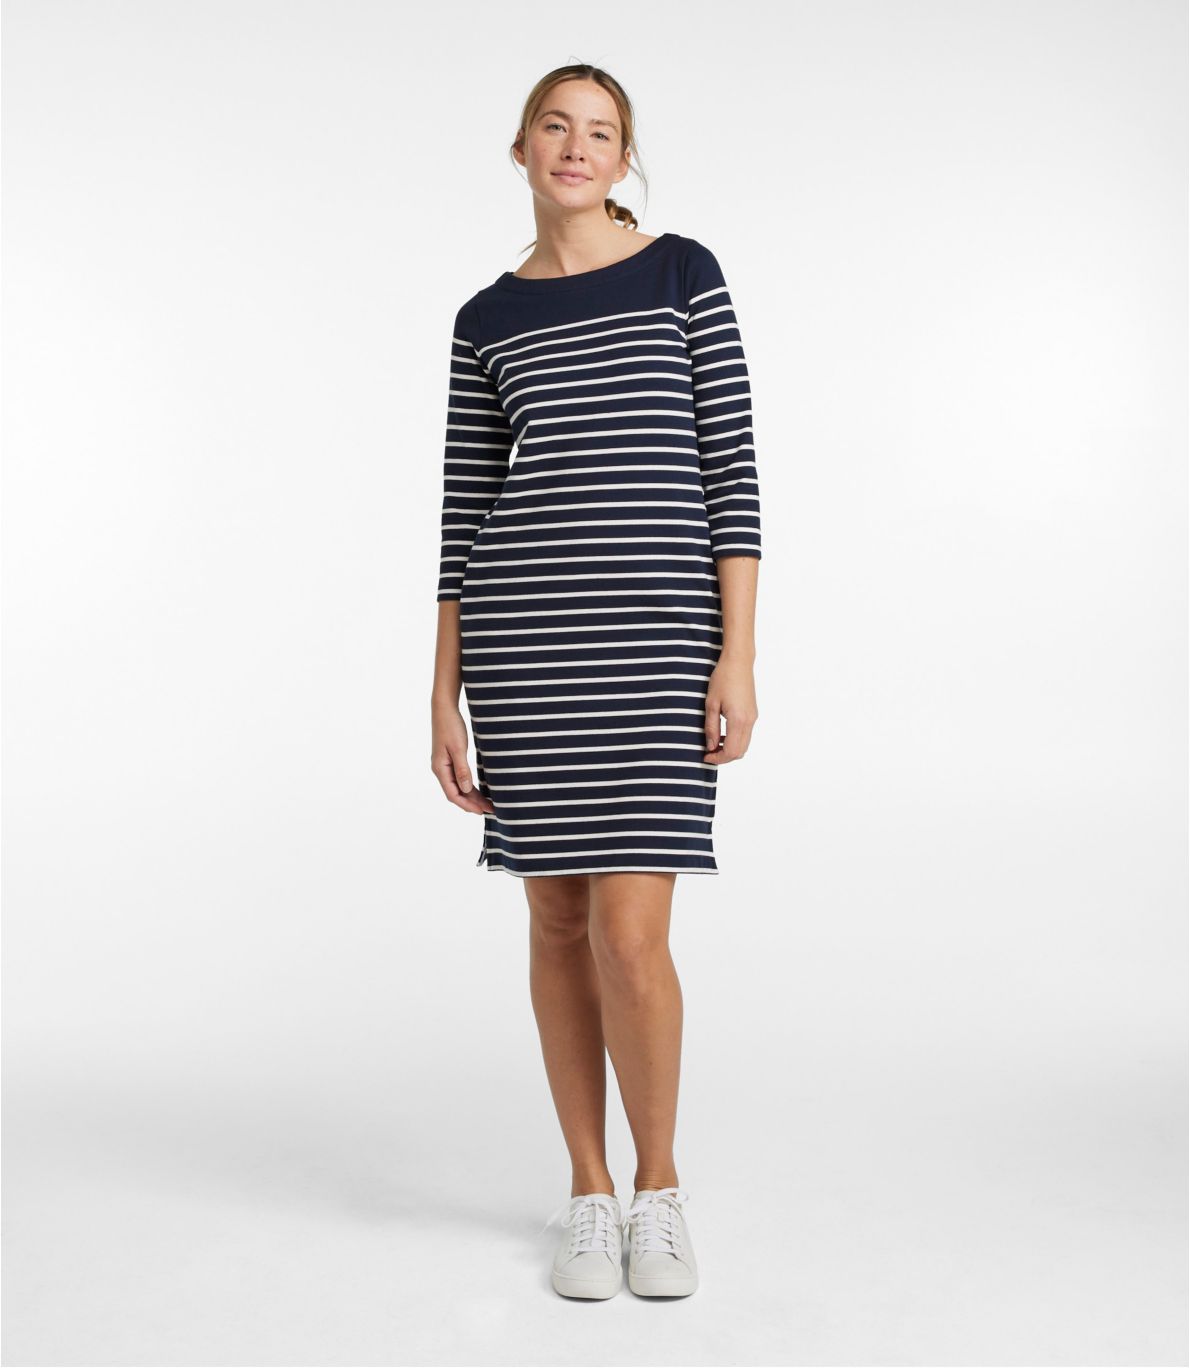 Women's Heritage Mariner Dress, Stripe